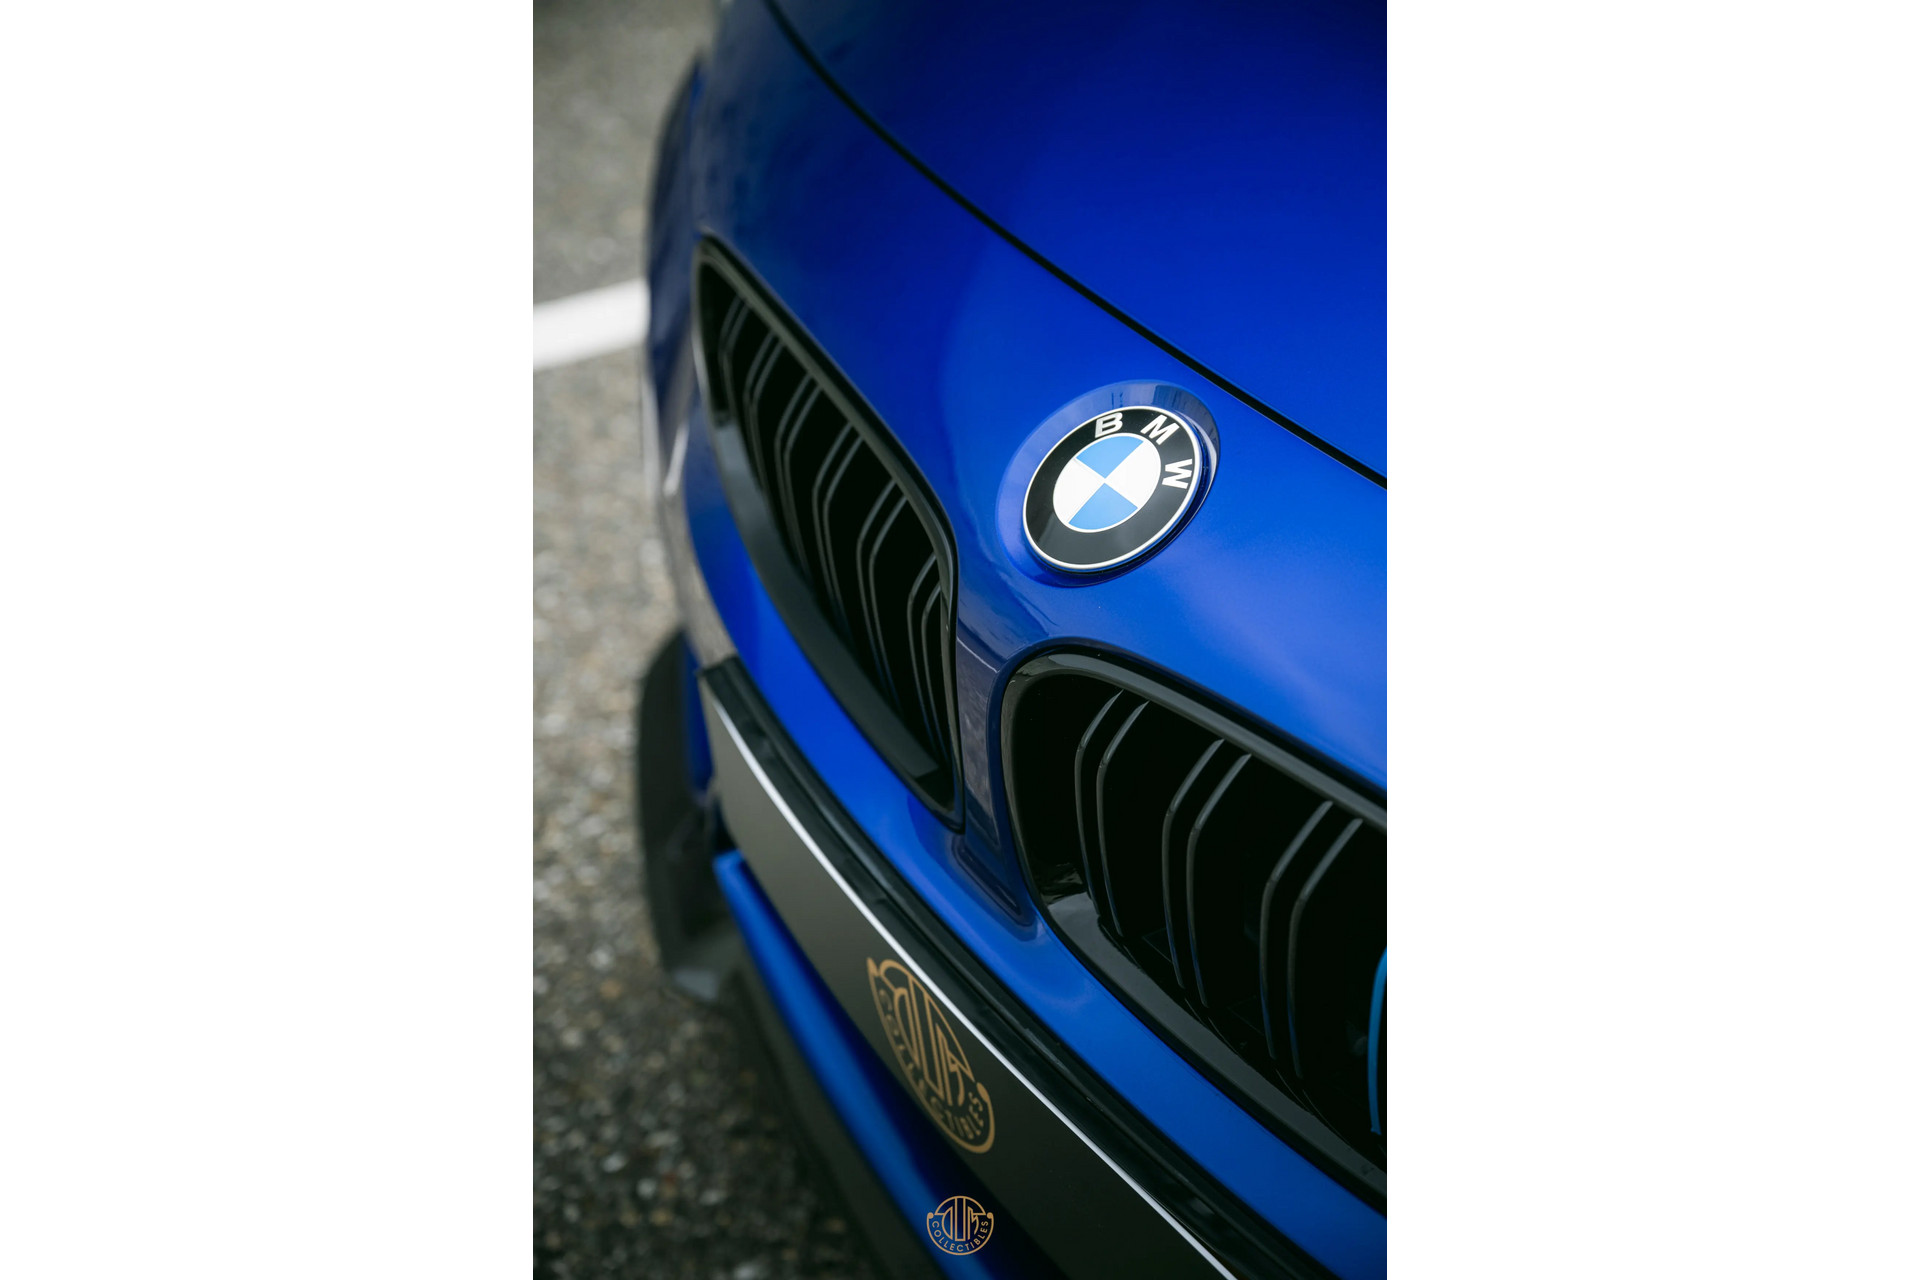 BMW 4 Serie Coupé M4 CS 2017 San marino blau metallic 33